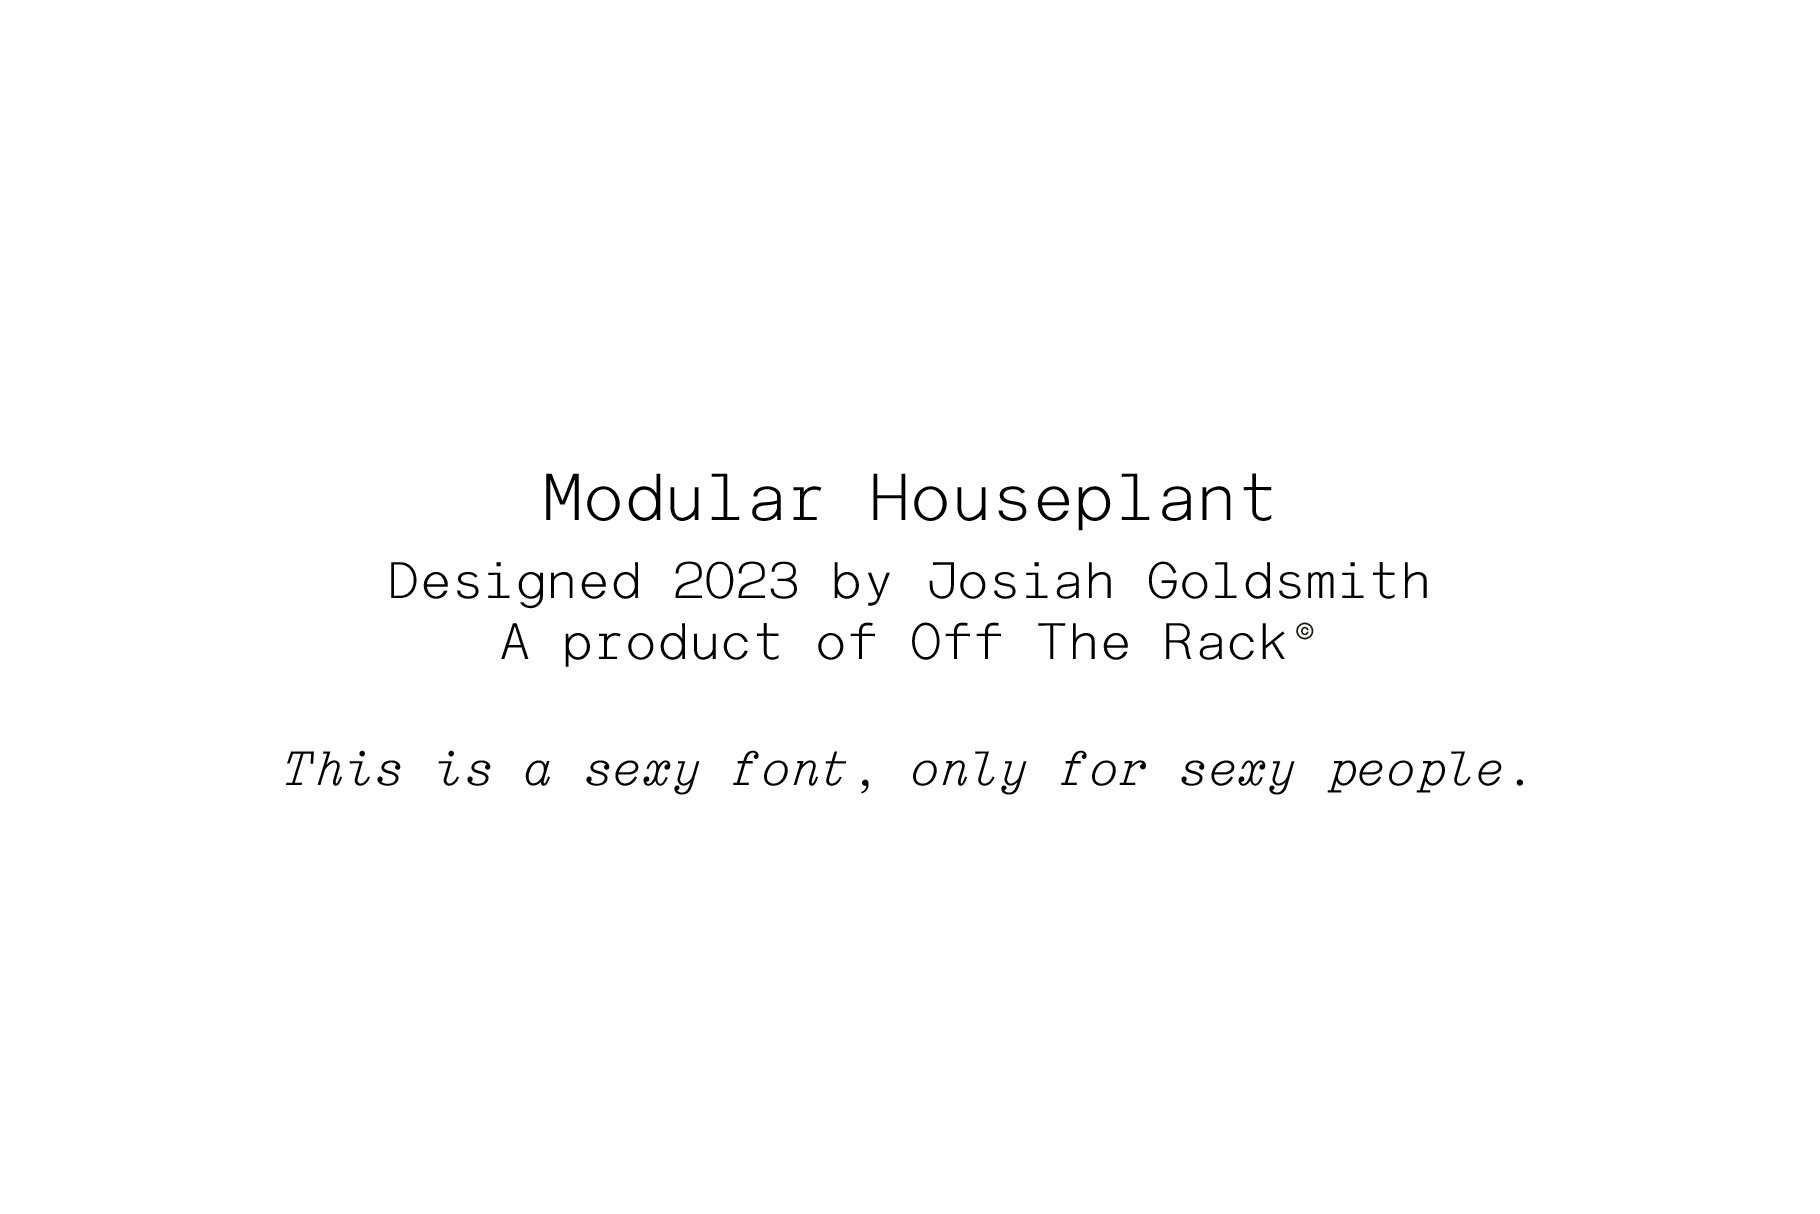 Modular Houseplant - Monospace Font cover image.